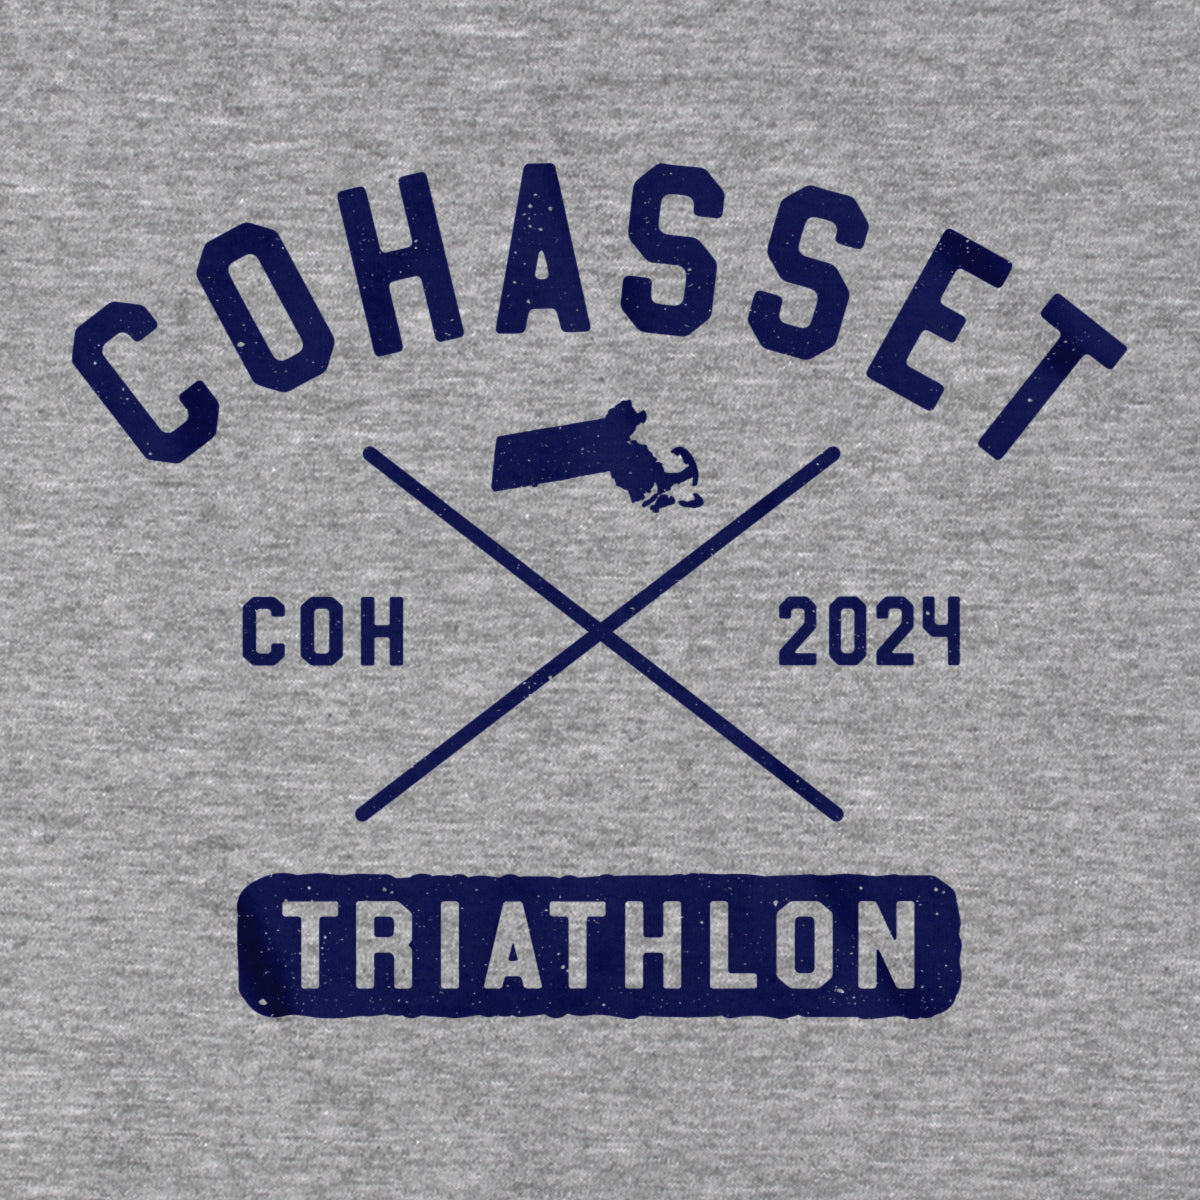 Cohasset Triathlon Arch Cross T-Shirt - Chowdaheadz